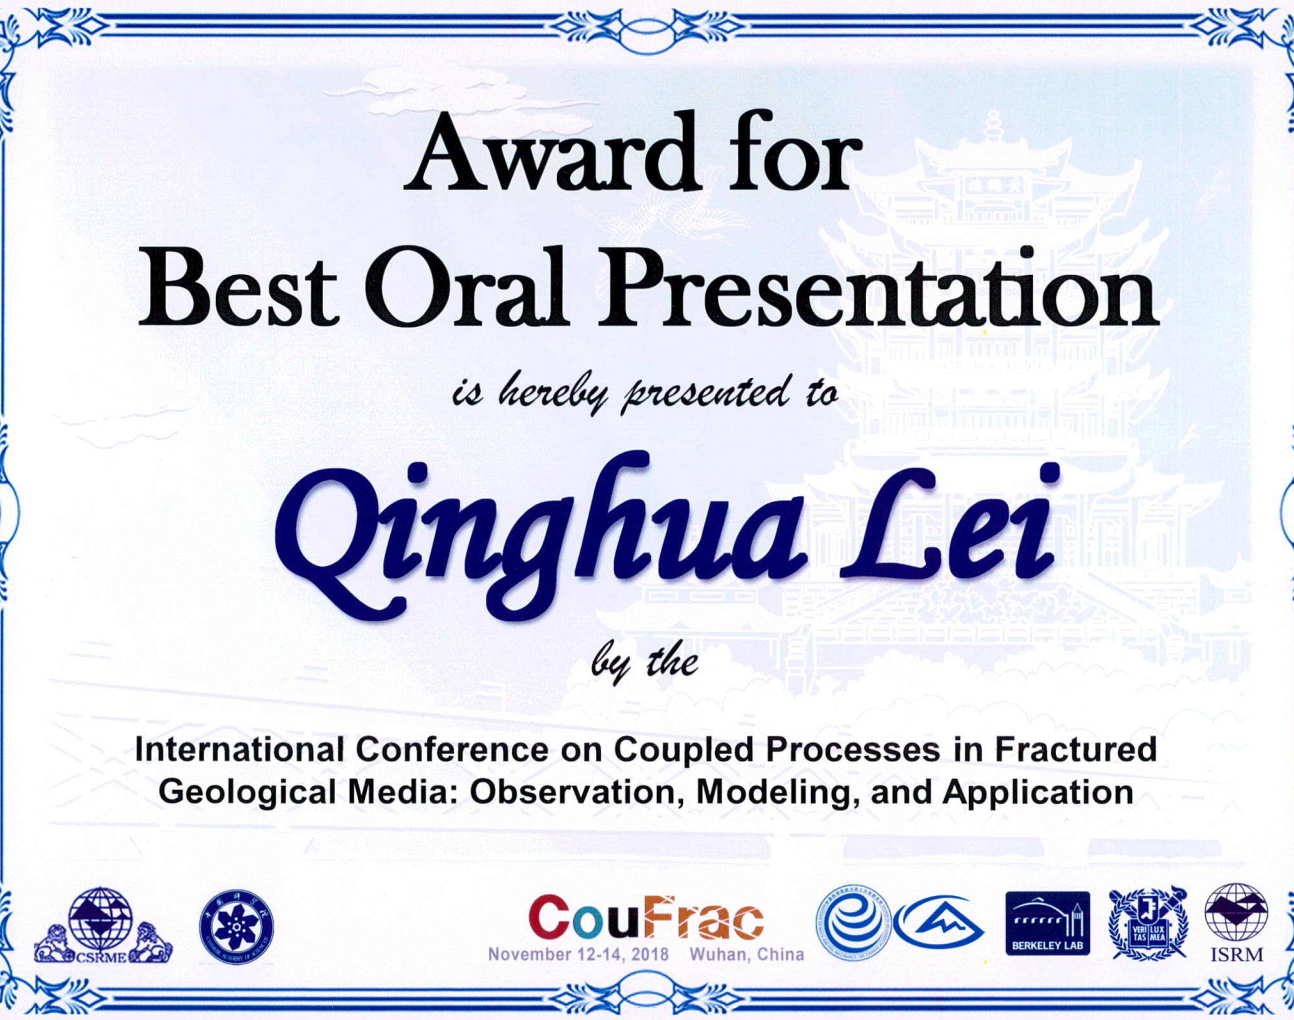 Qinghua's Best Oral Presentation Award at CouFrac